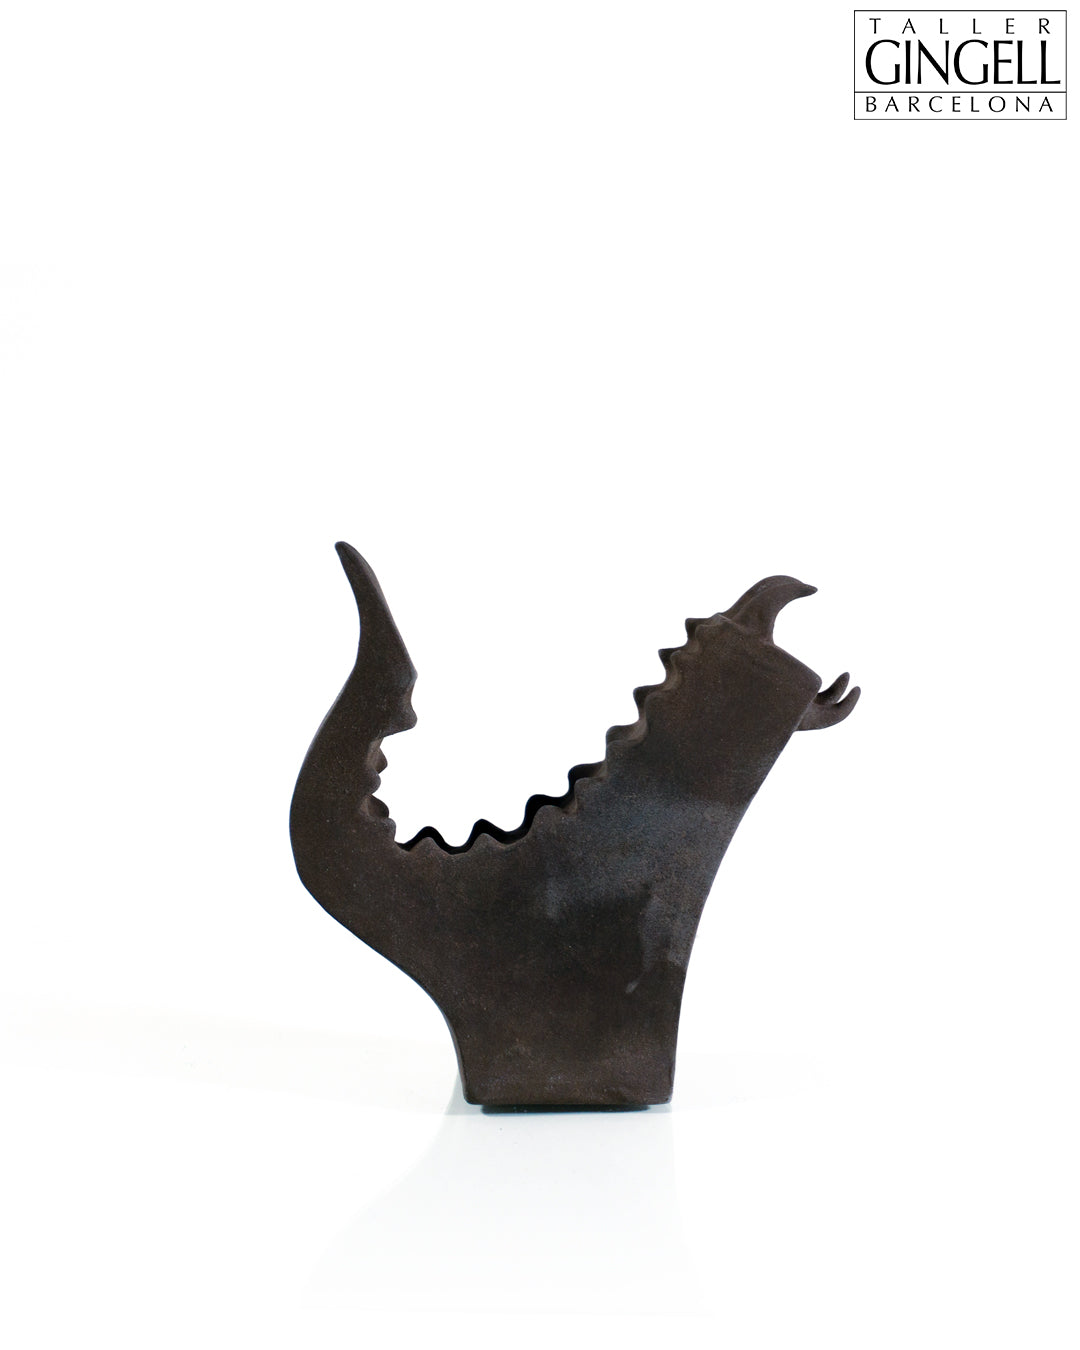 Ceramic sculpture in black stoneware from Catalonia